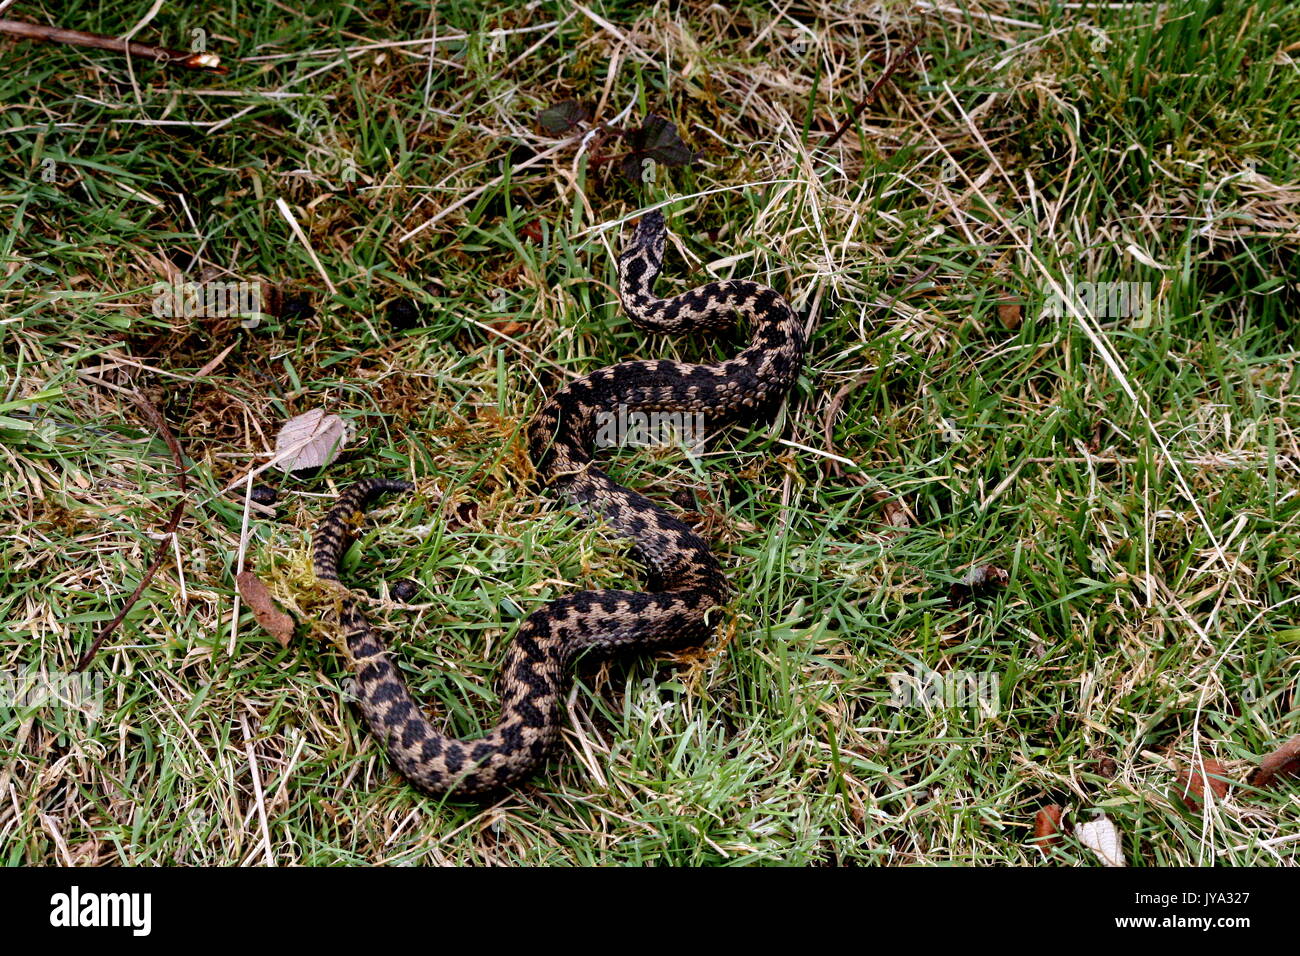 Adder showing scaring from Avian predation, Common European Viper, Vipera berus, on the Malvern Hills, Worcestershire. Adult female venomous snake UK Stock Photo